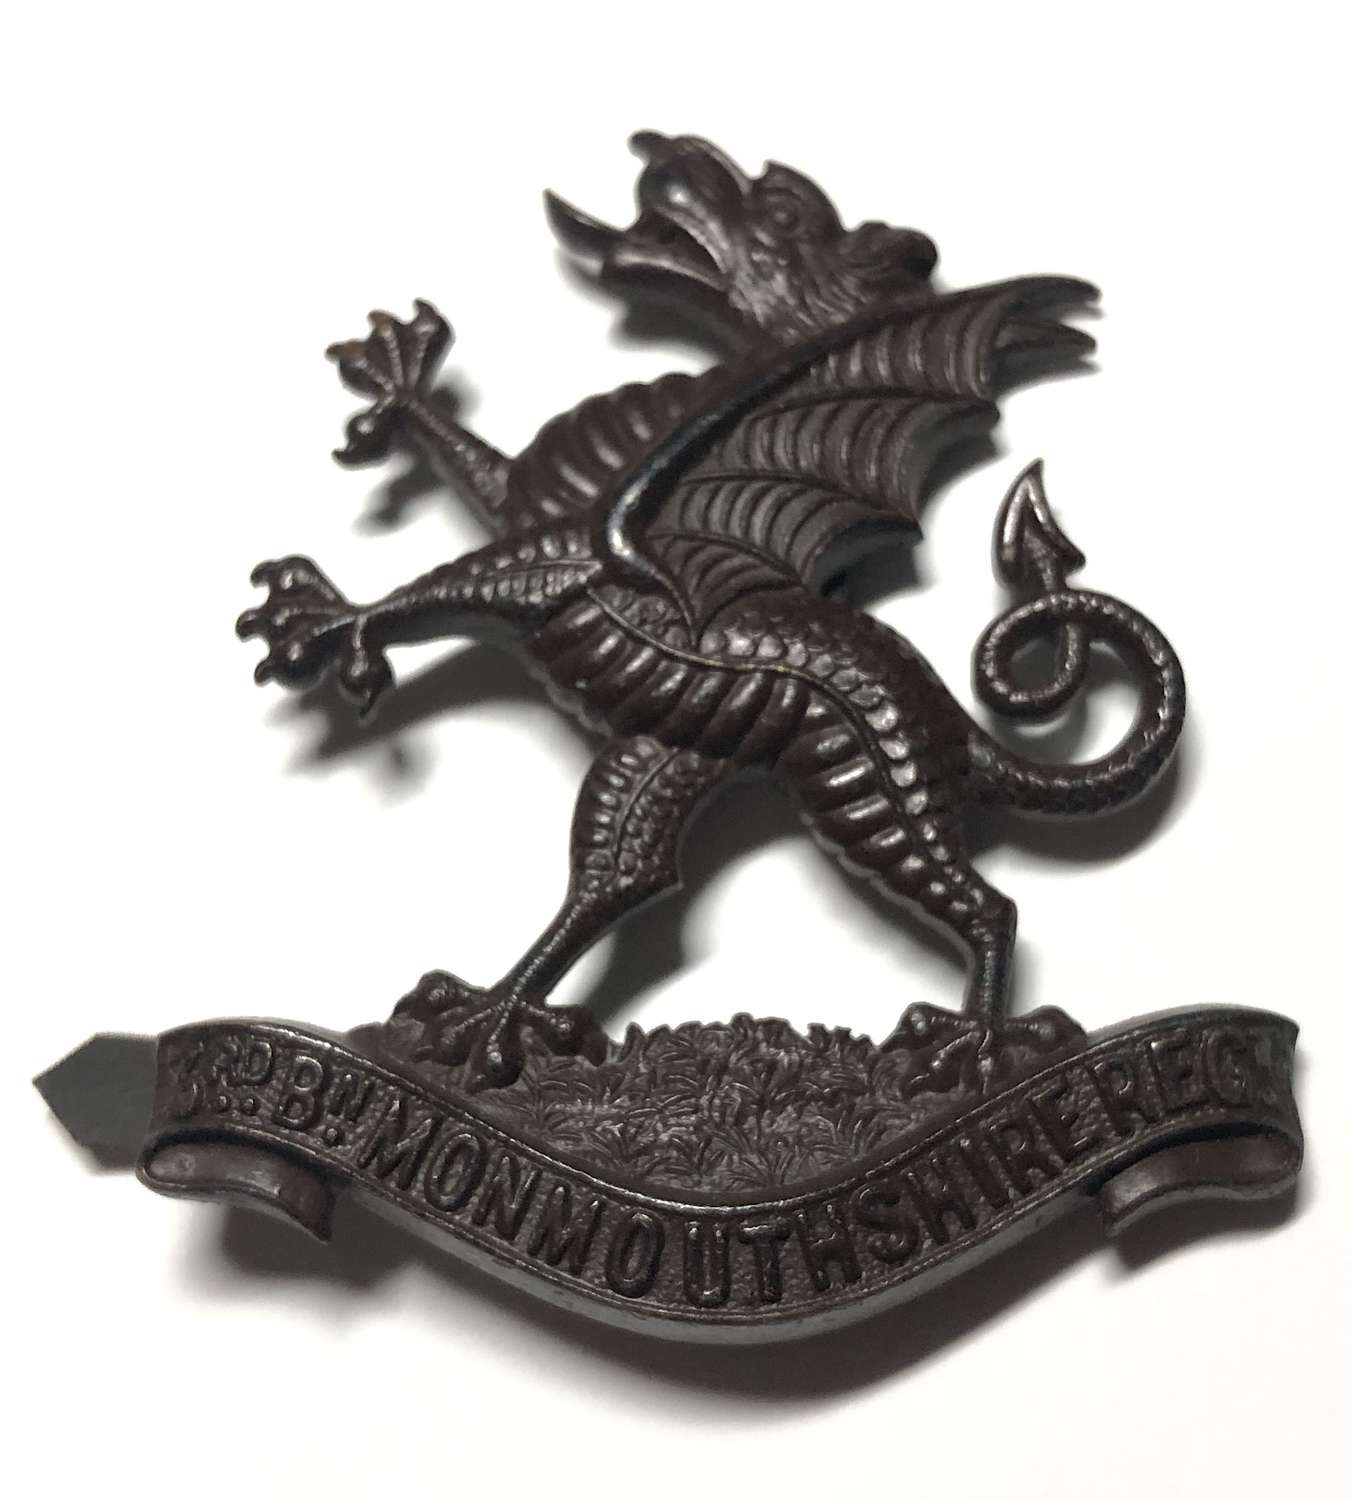 Welsh. 3rd Bn. Monmouthshire Regiment post 1908 OSD cap badge